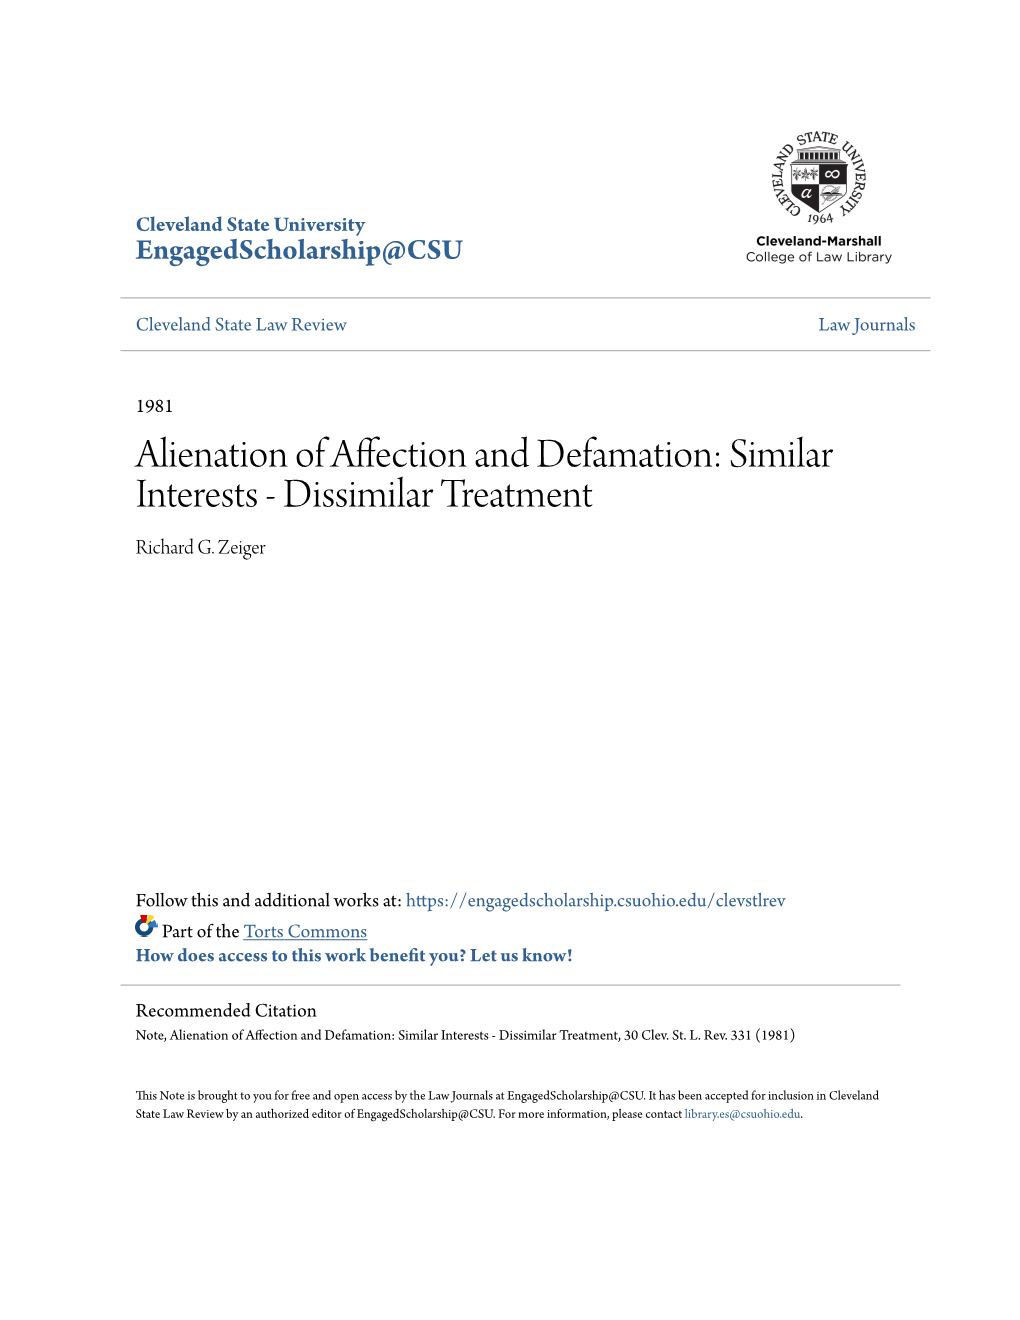 Alienation of Affection and Defamation: Similar Interests - Dissimilar Treatment Richard G